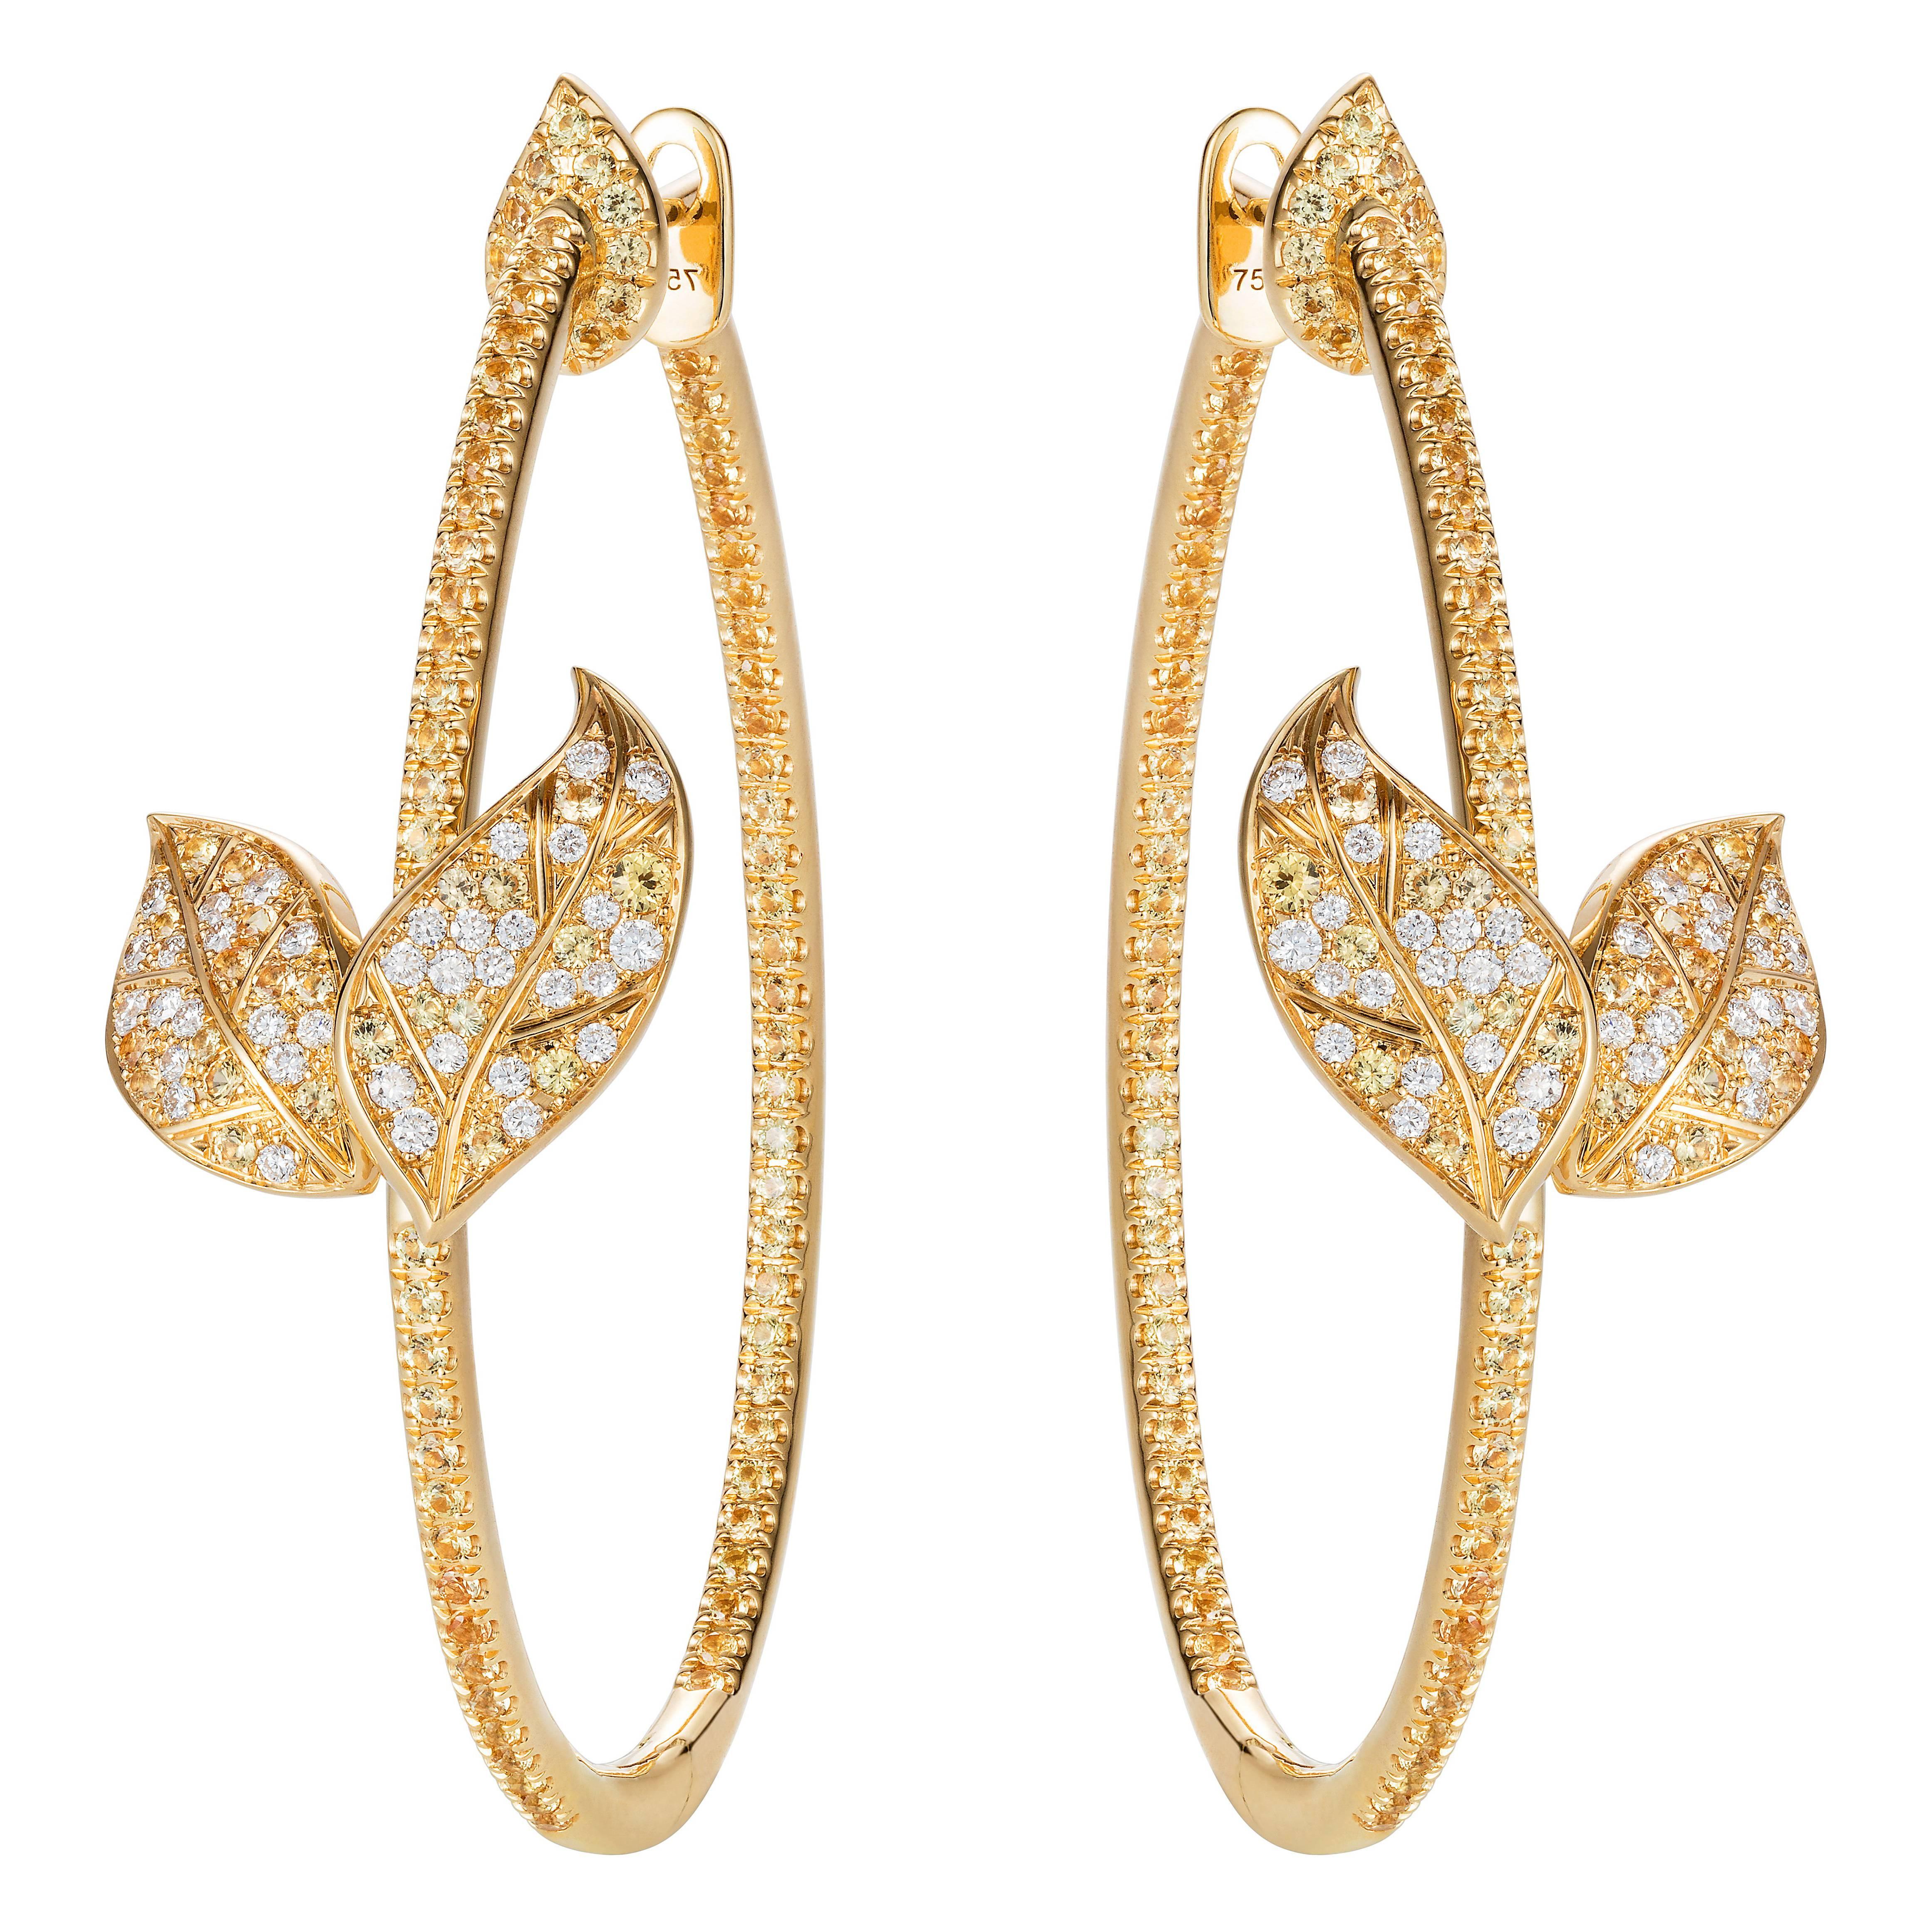 Nadine Aysoy Petite Feuilles 18 Karat Gold, Diamond and Sapphire Hoop Earrings For Sale